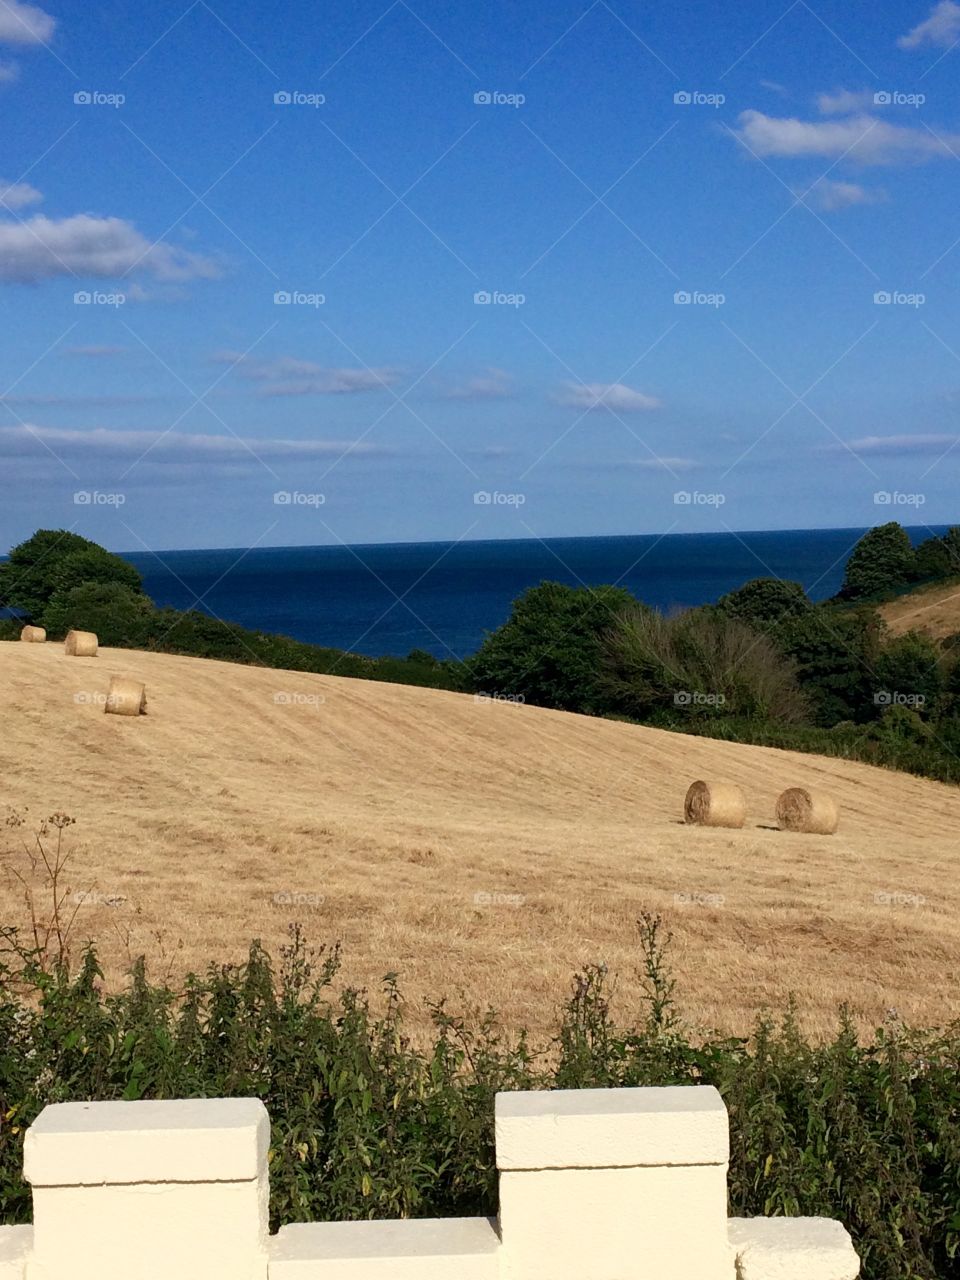 Blue sky, blue sea and a sea full of hay rolls. Very blue sea, Devon uk. Show me the beach. 